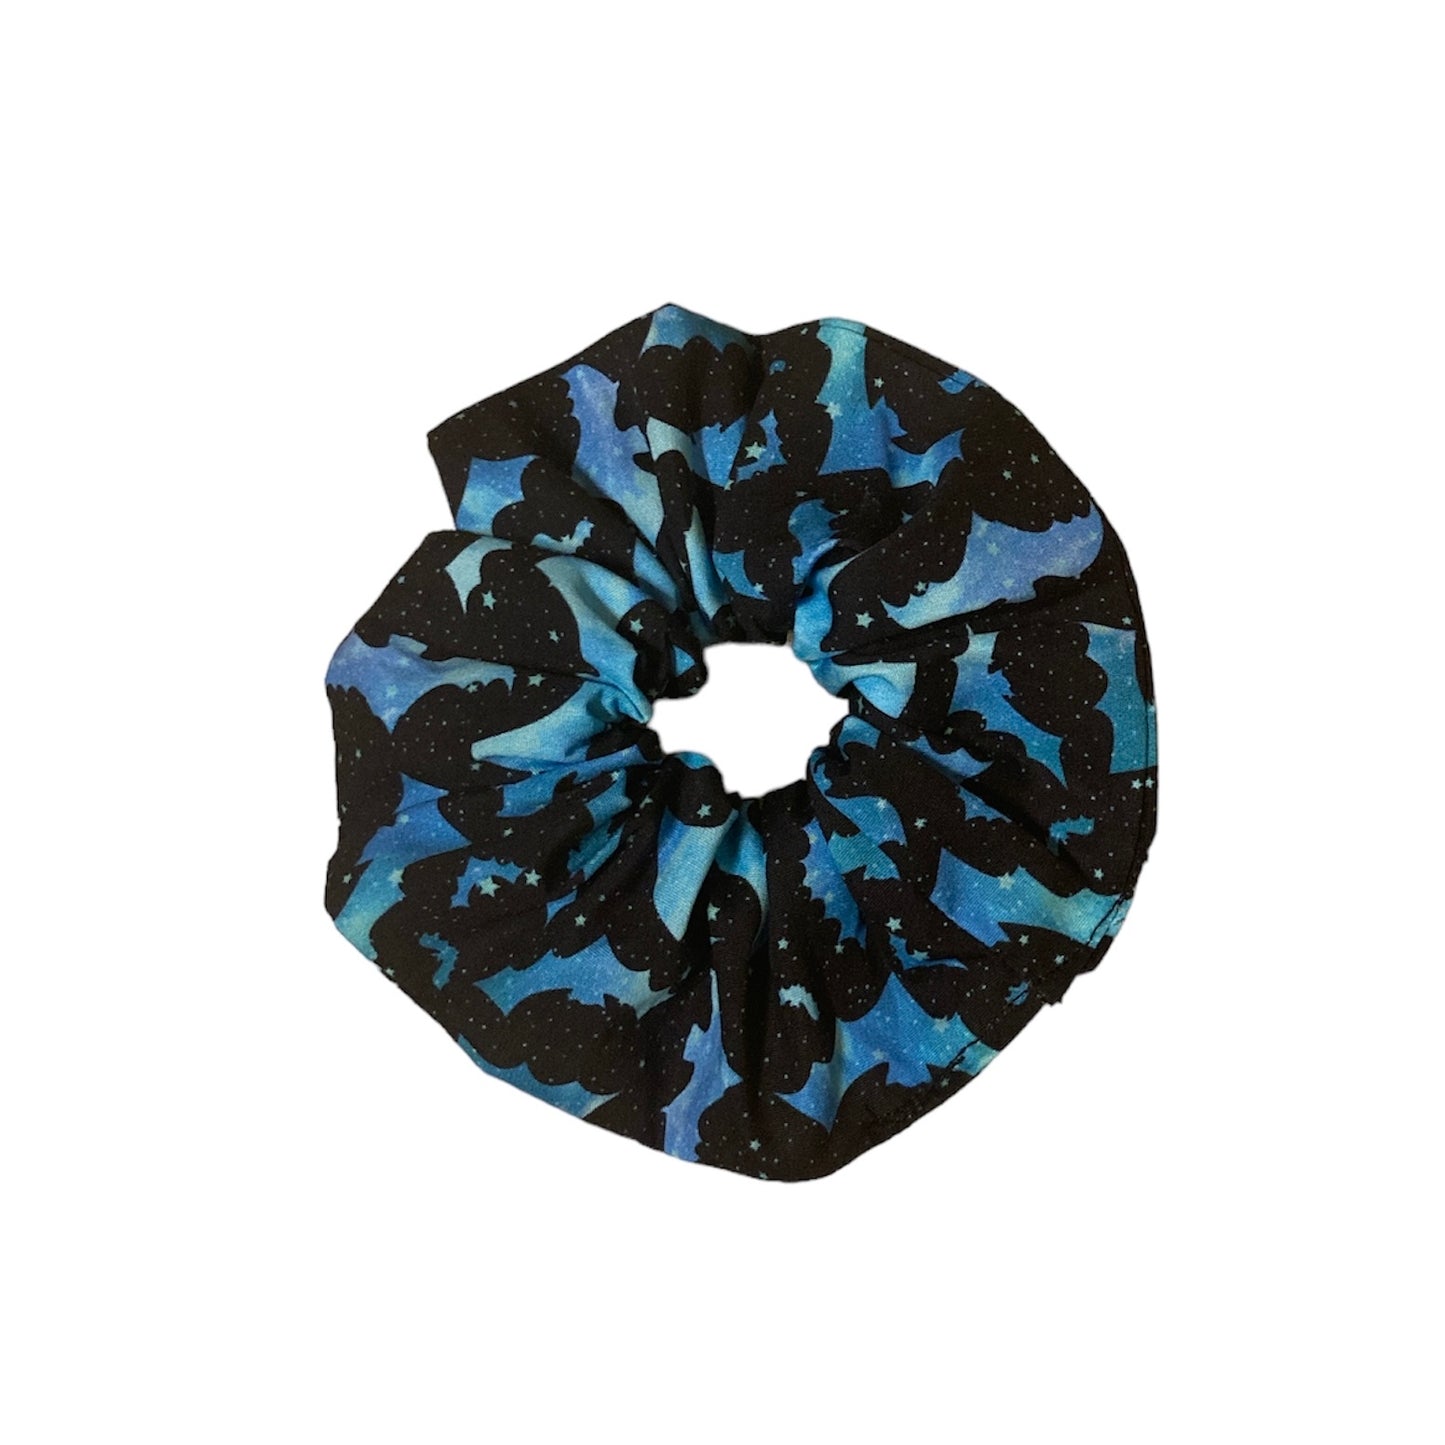 Cosmic blue bat pattern cotton scrunchies